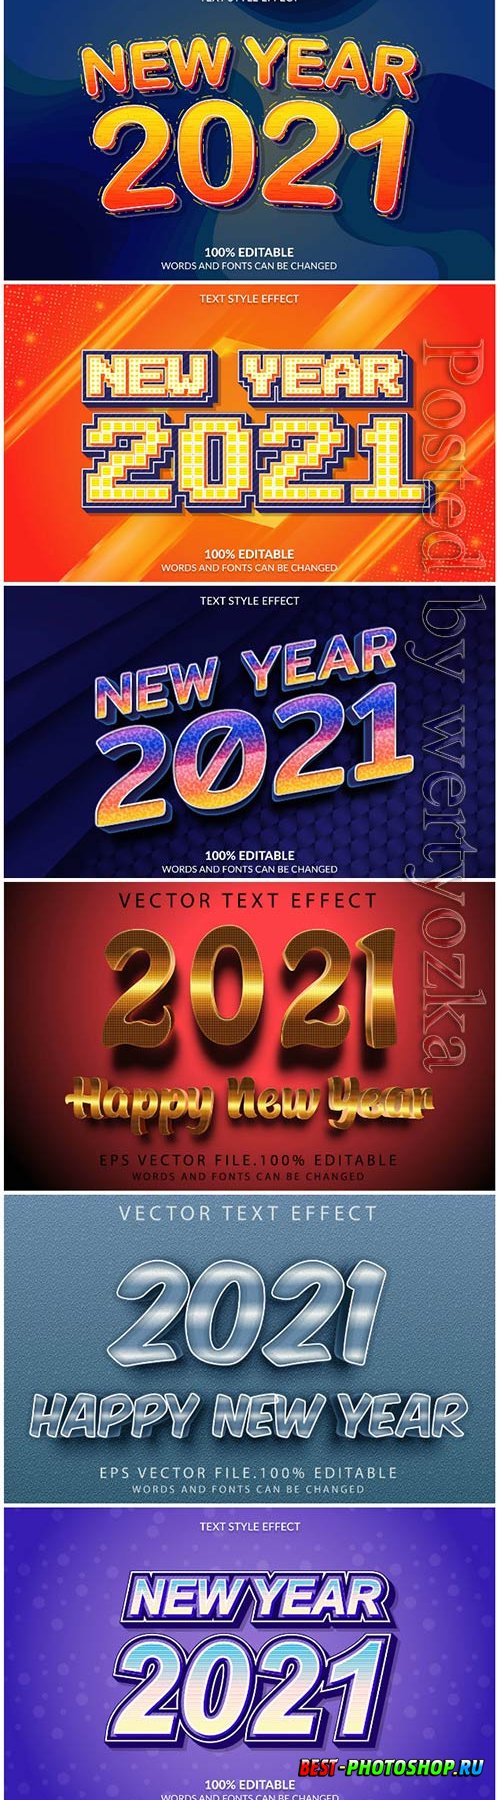 3d editable text style effect vector vol 59